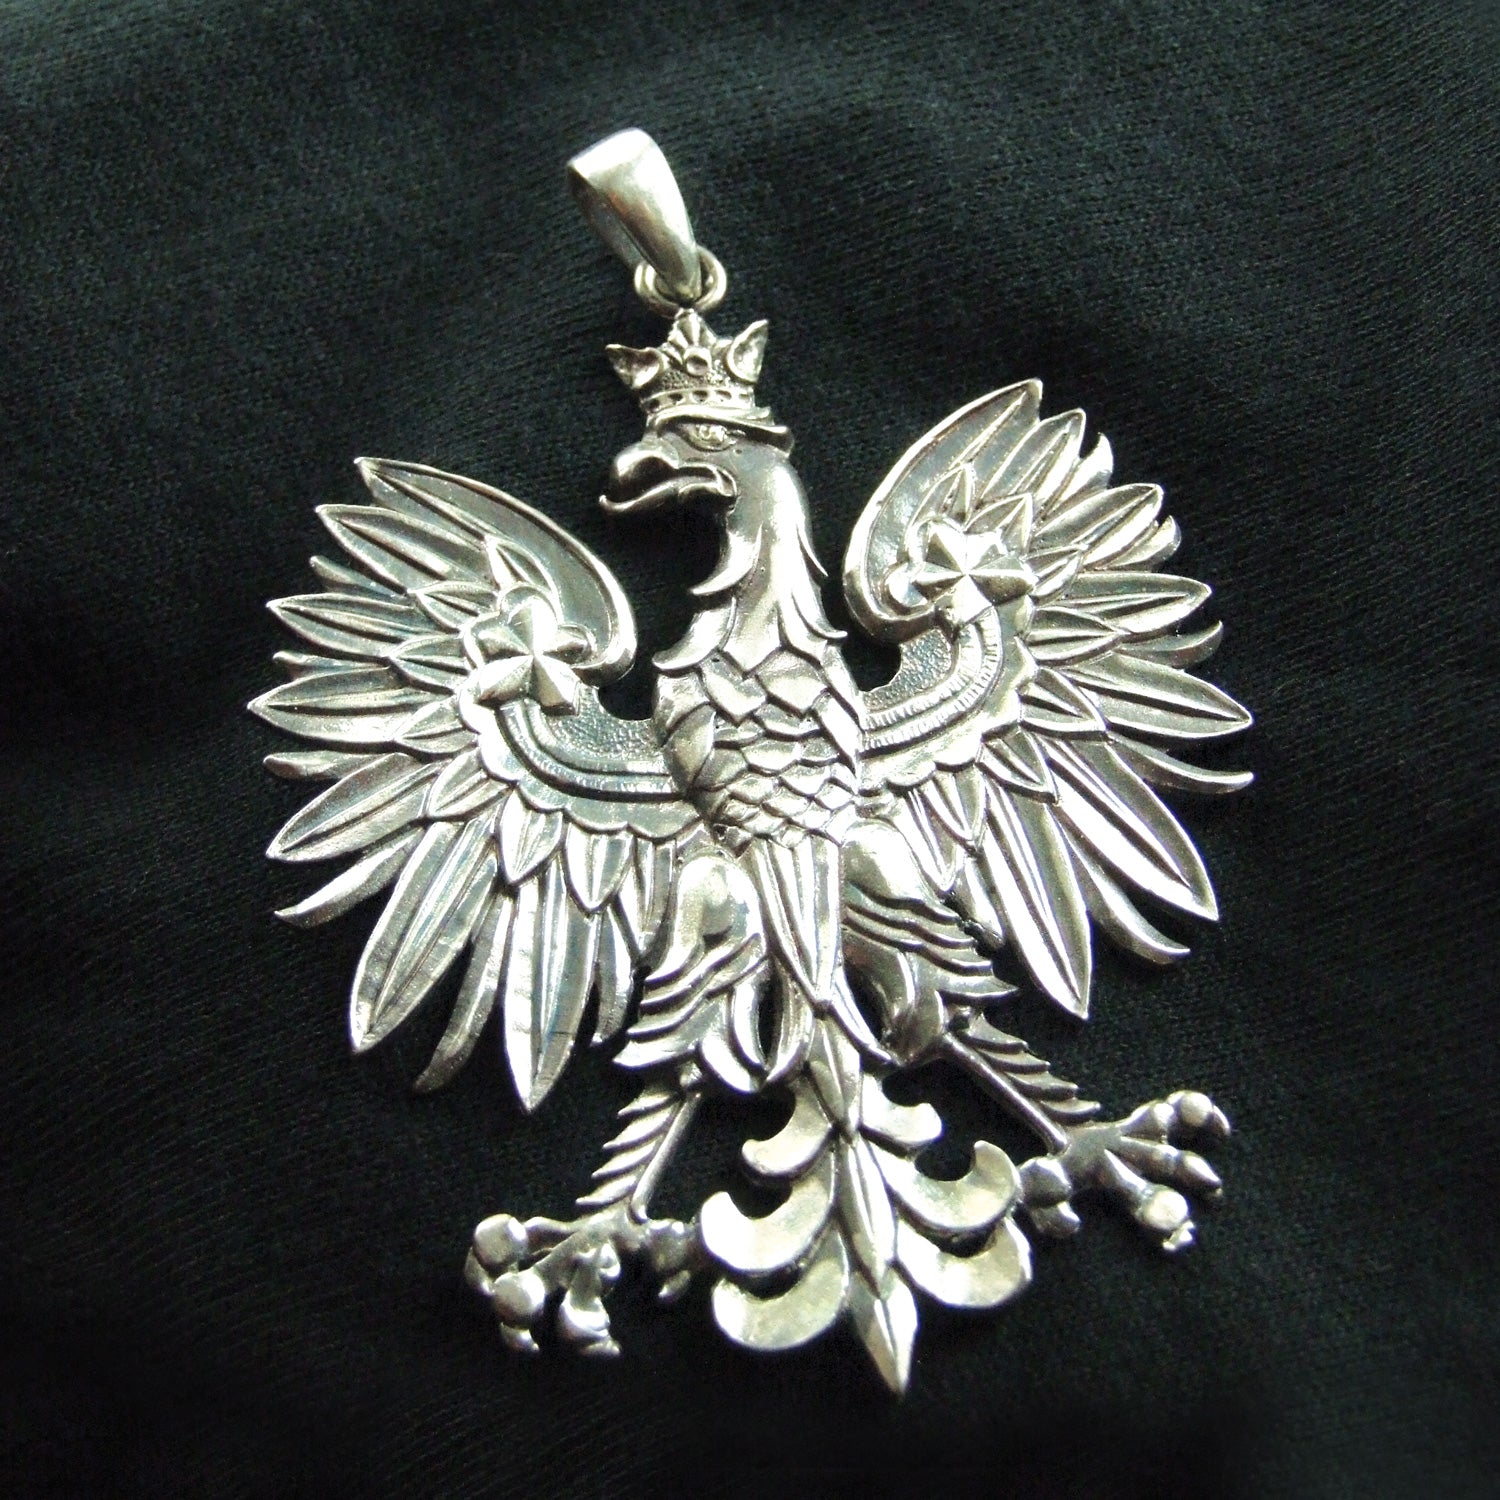 925 proof Silver Polish Eagle Pendant 2.5 inch